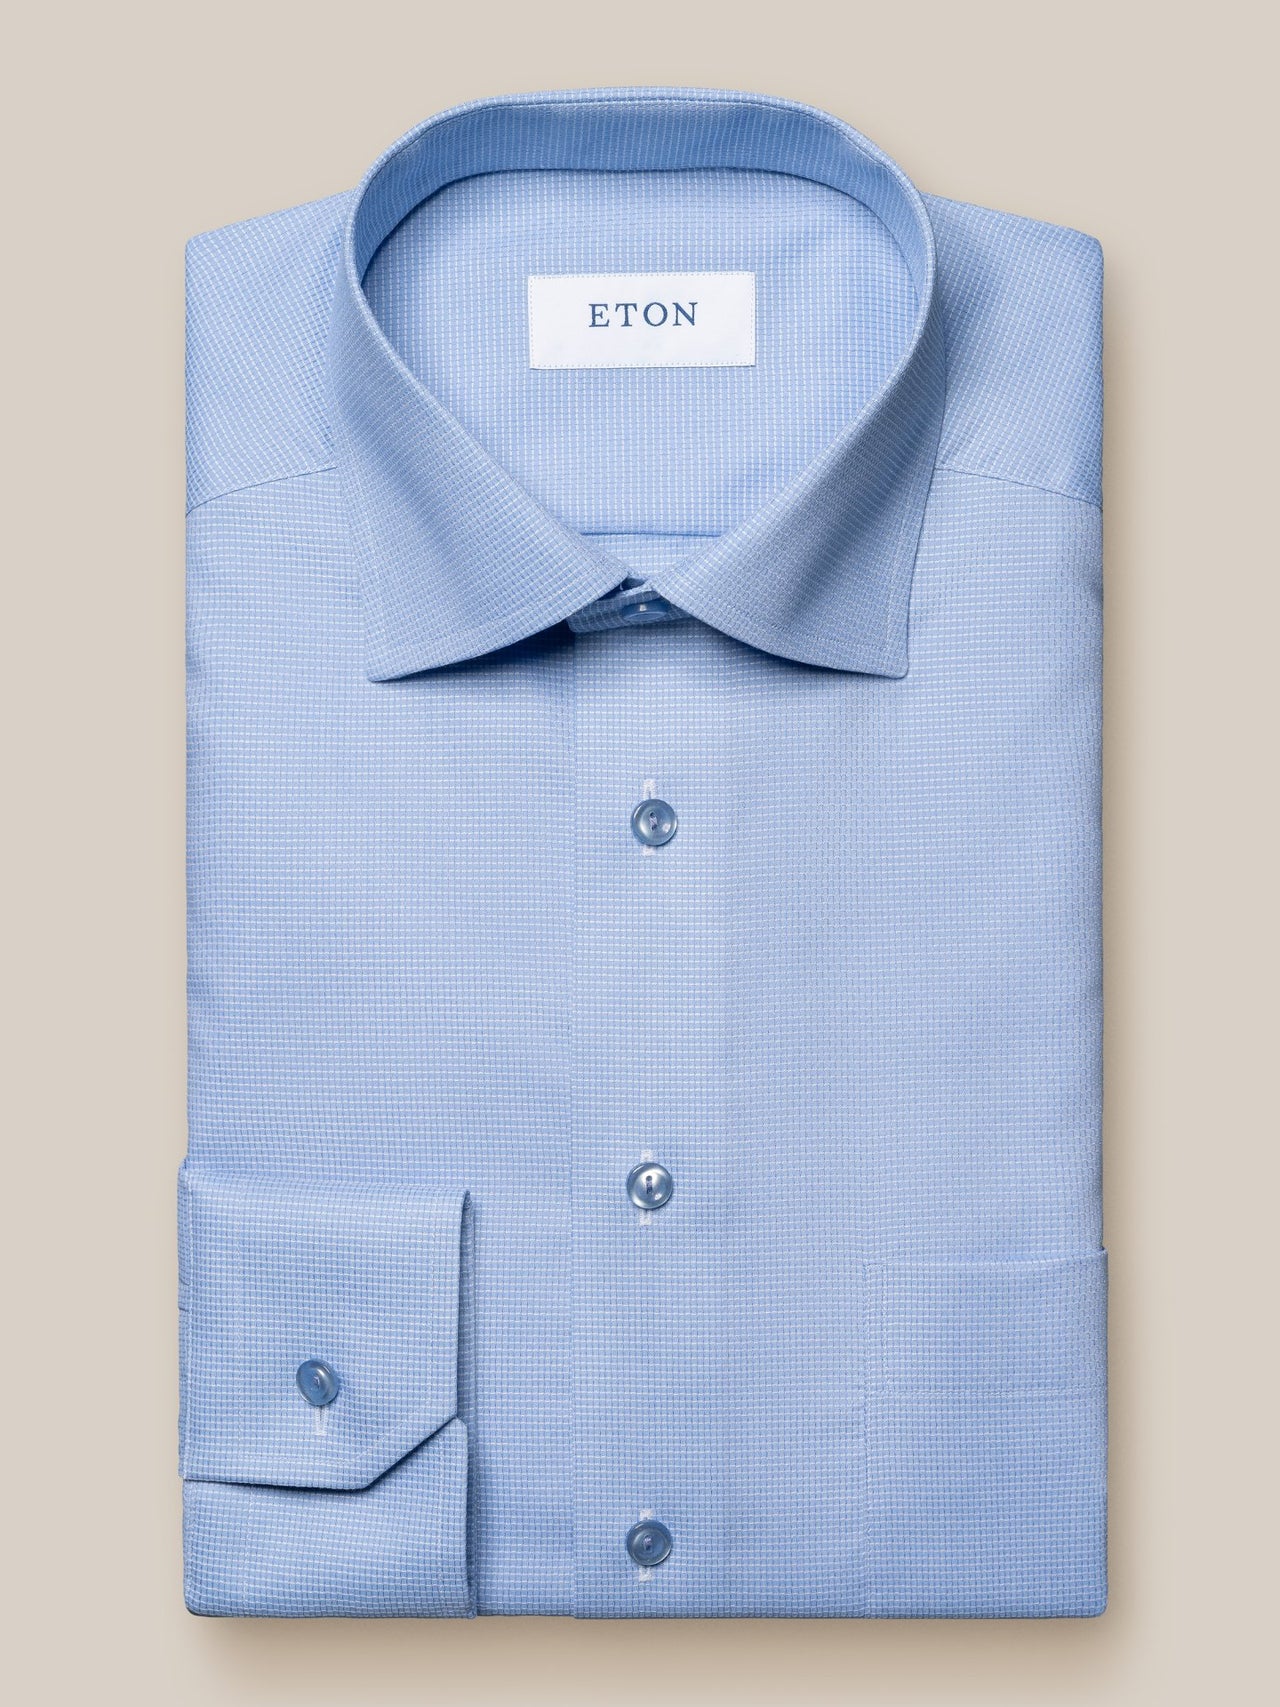 ETON Cutaway Long Sleeve Shirt Single Cuff Contemporary Fit LIGHT BLUE